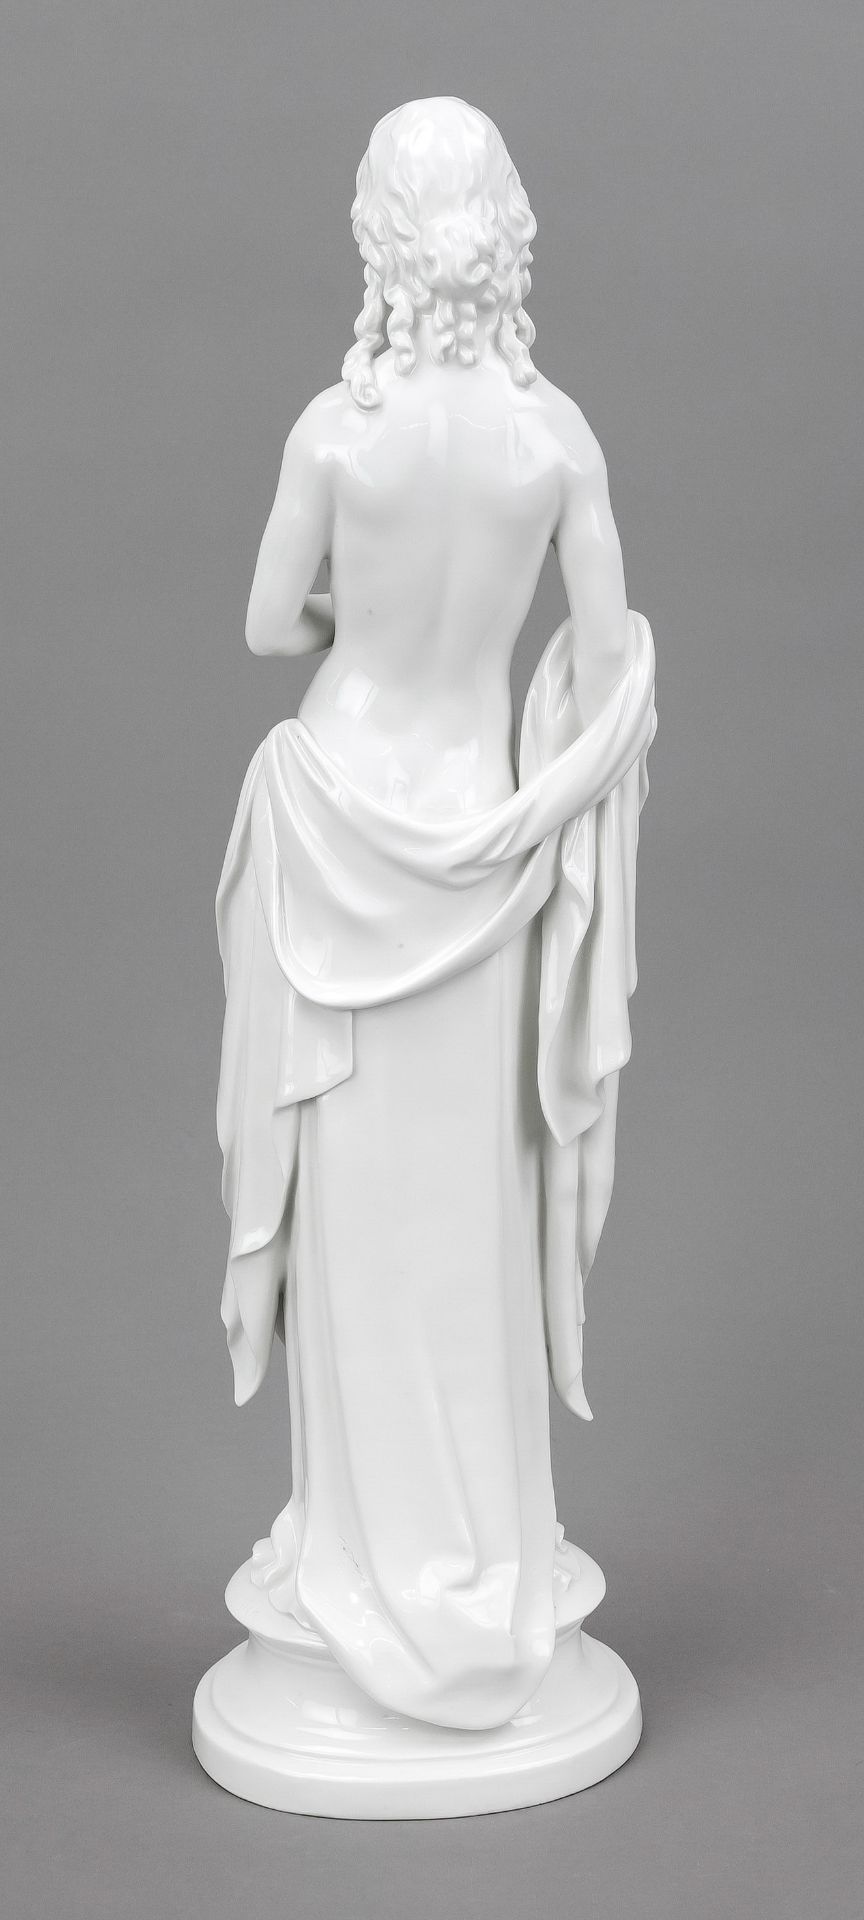 Art Deco figurine 'Flora', Meissen, mark after 1934, deputat, white, designed by Ludwig Nick in - Image 2 of 2